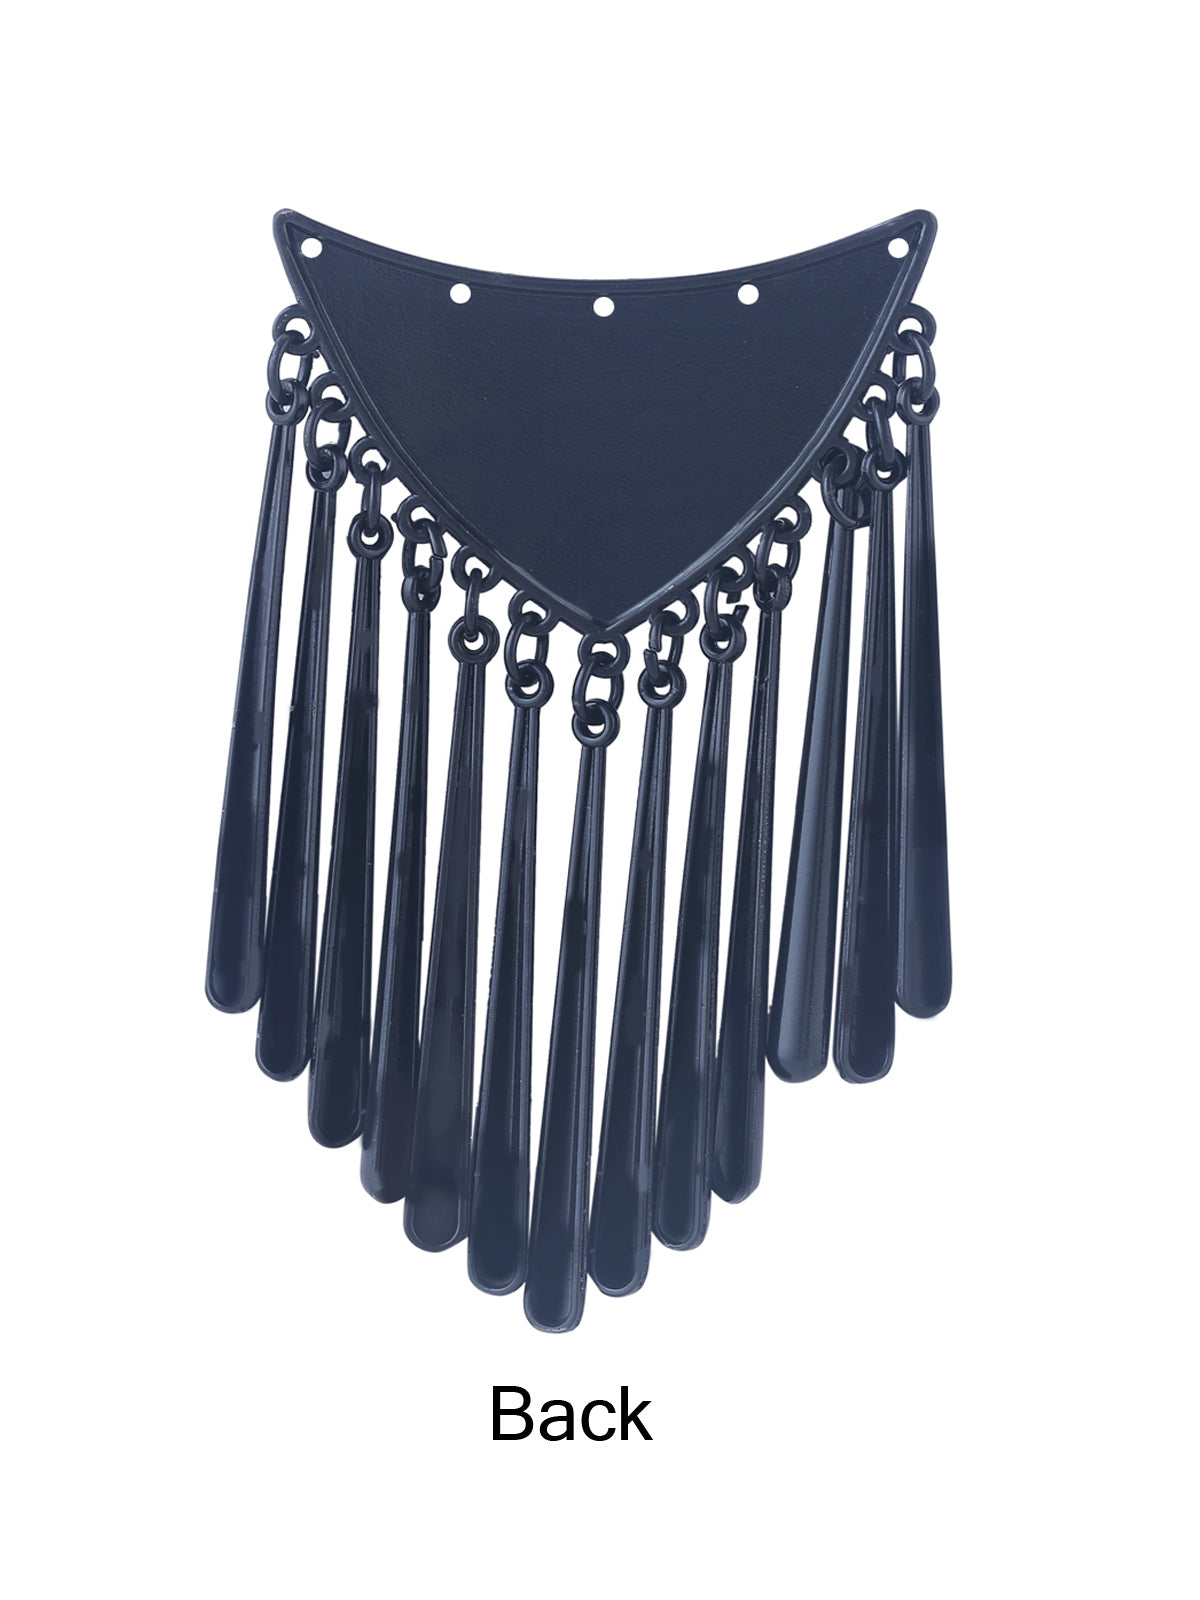 Exquisite Matte Black Finish Tassel Design Neckline